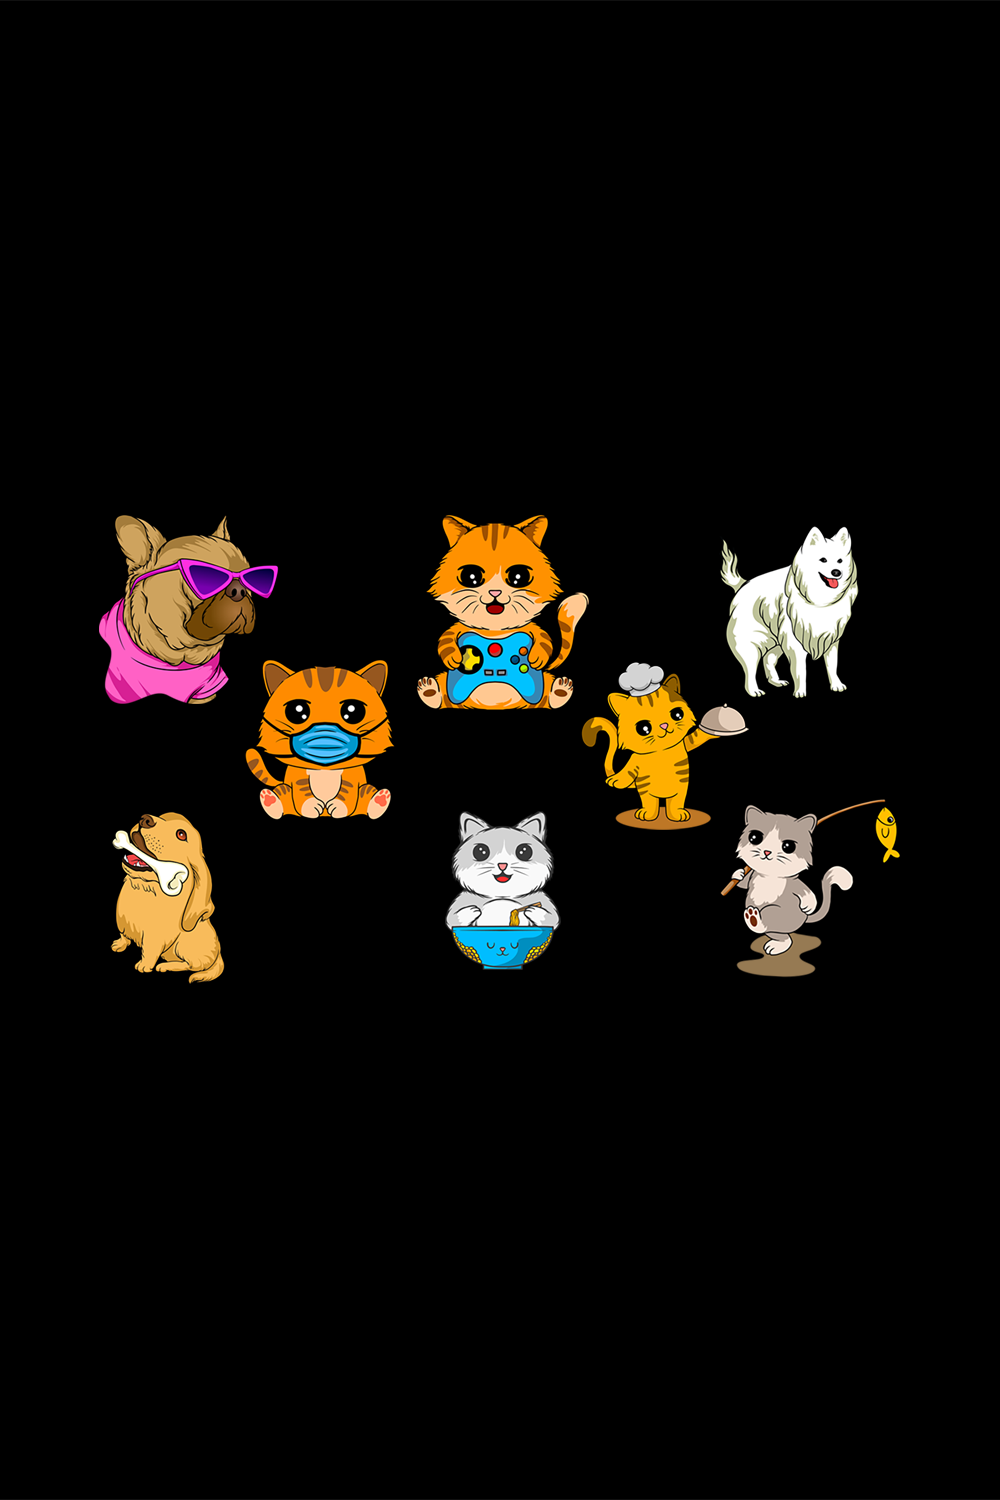 Cat & Dog Master Bundle at 6$ pinterest preview image.